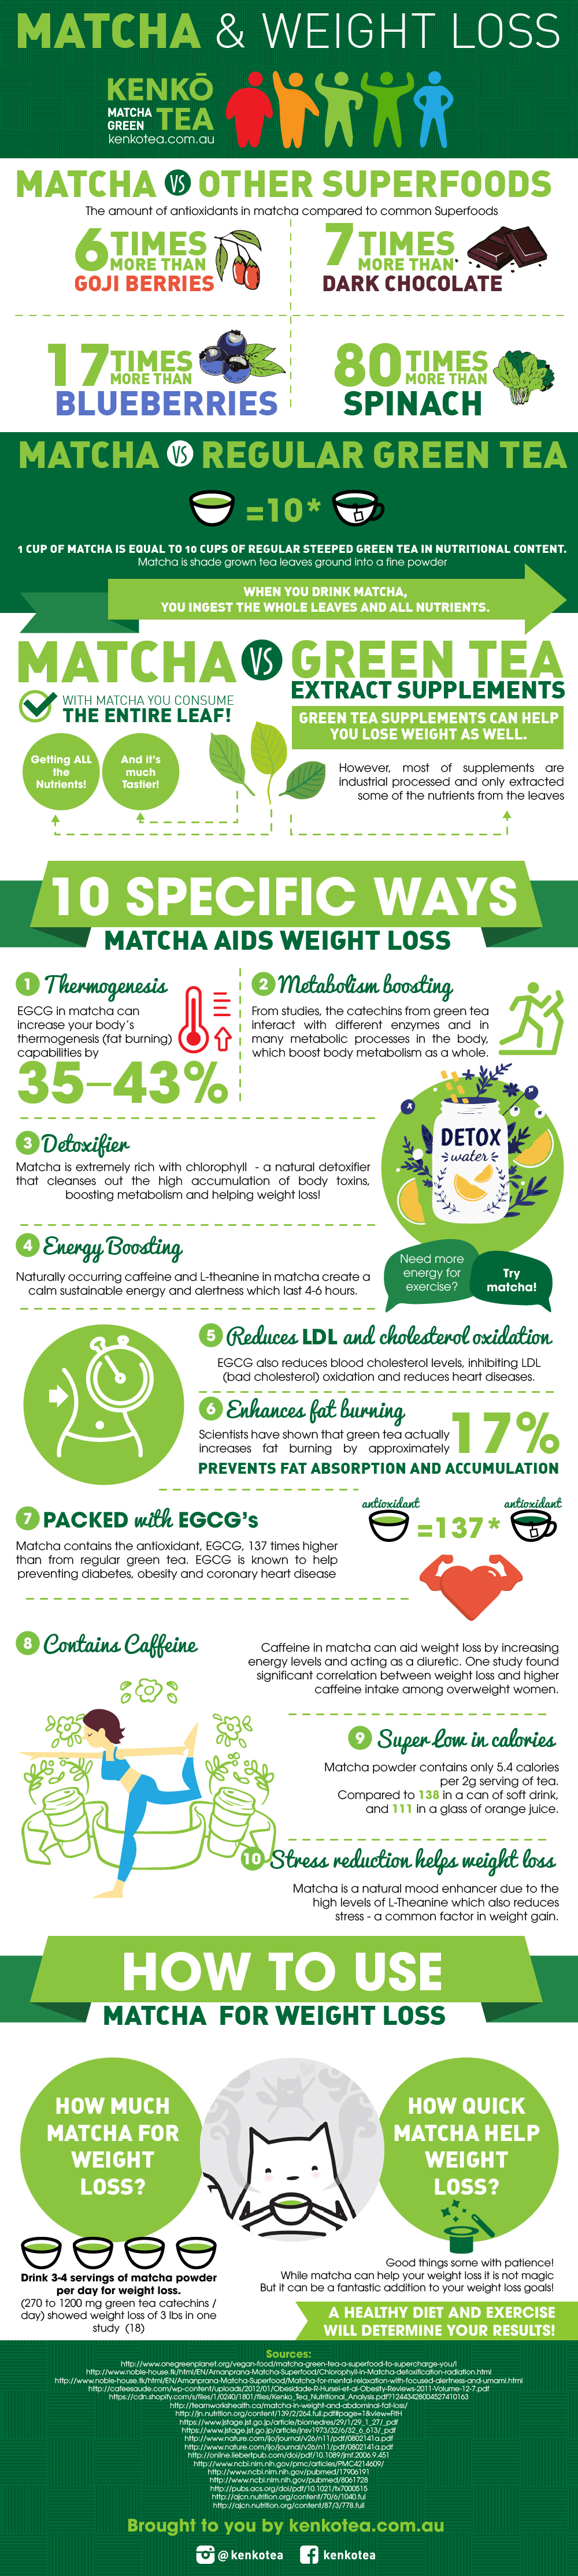 matcha Weight loss Kenko Tea Matcha Green Tea infographic